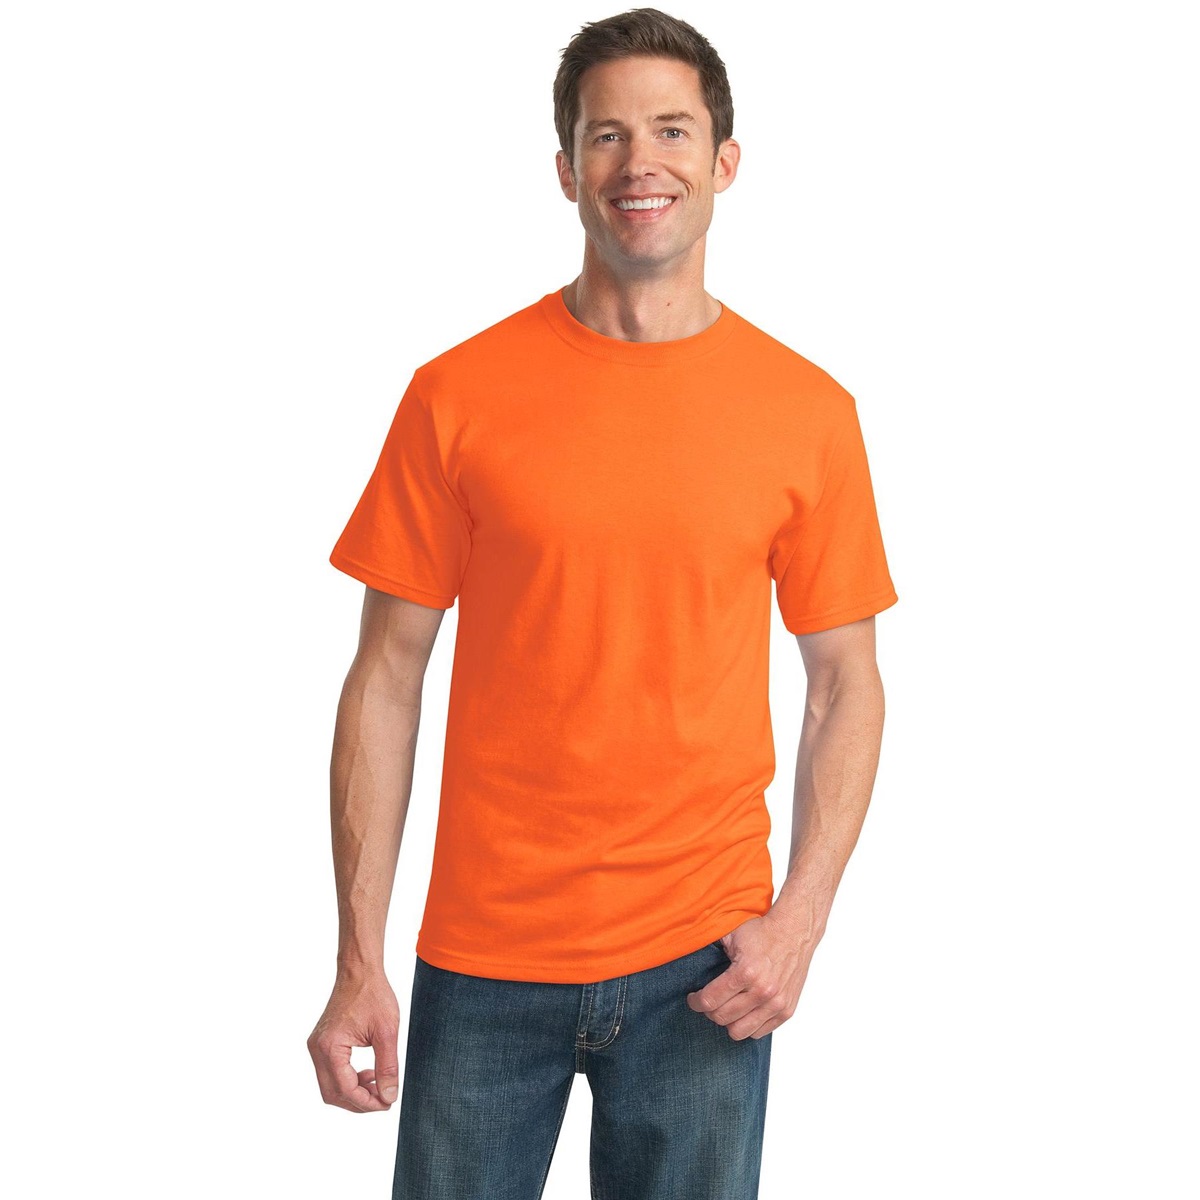 Jerzees 29M Heavyweight Blend 50/50 Cotton/Poly T-Shirt - Safety Orange ...